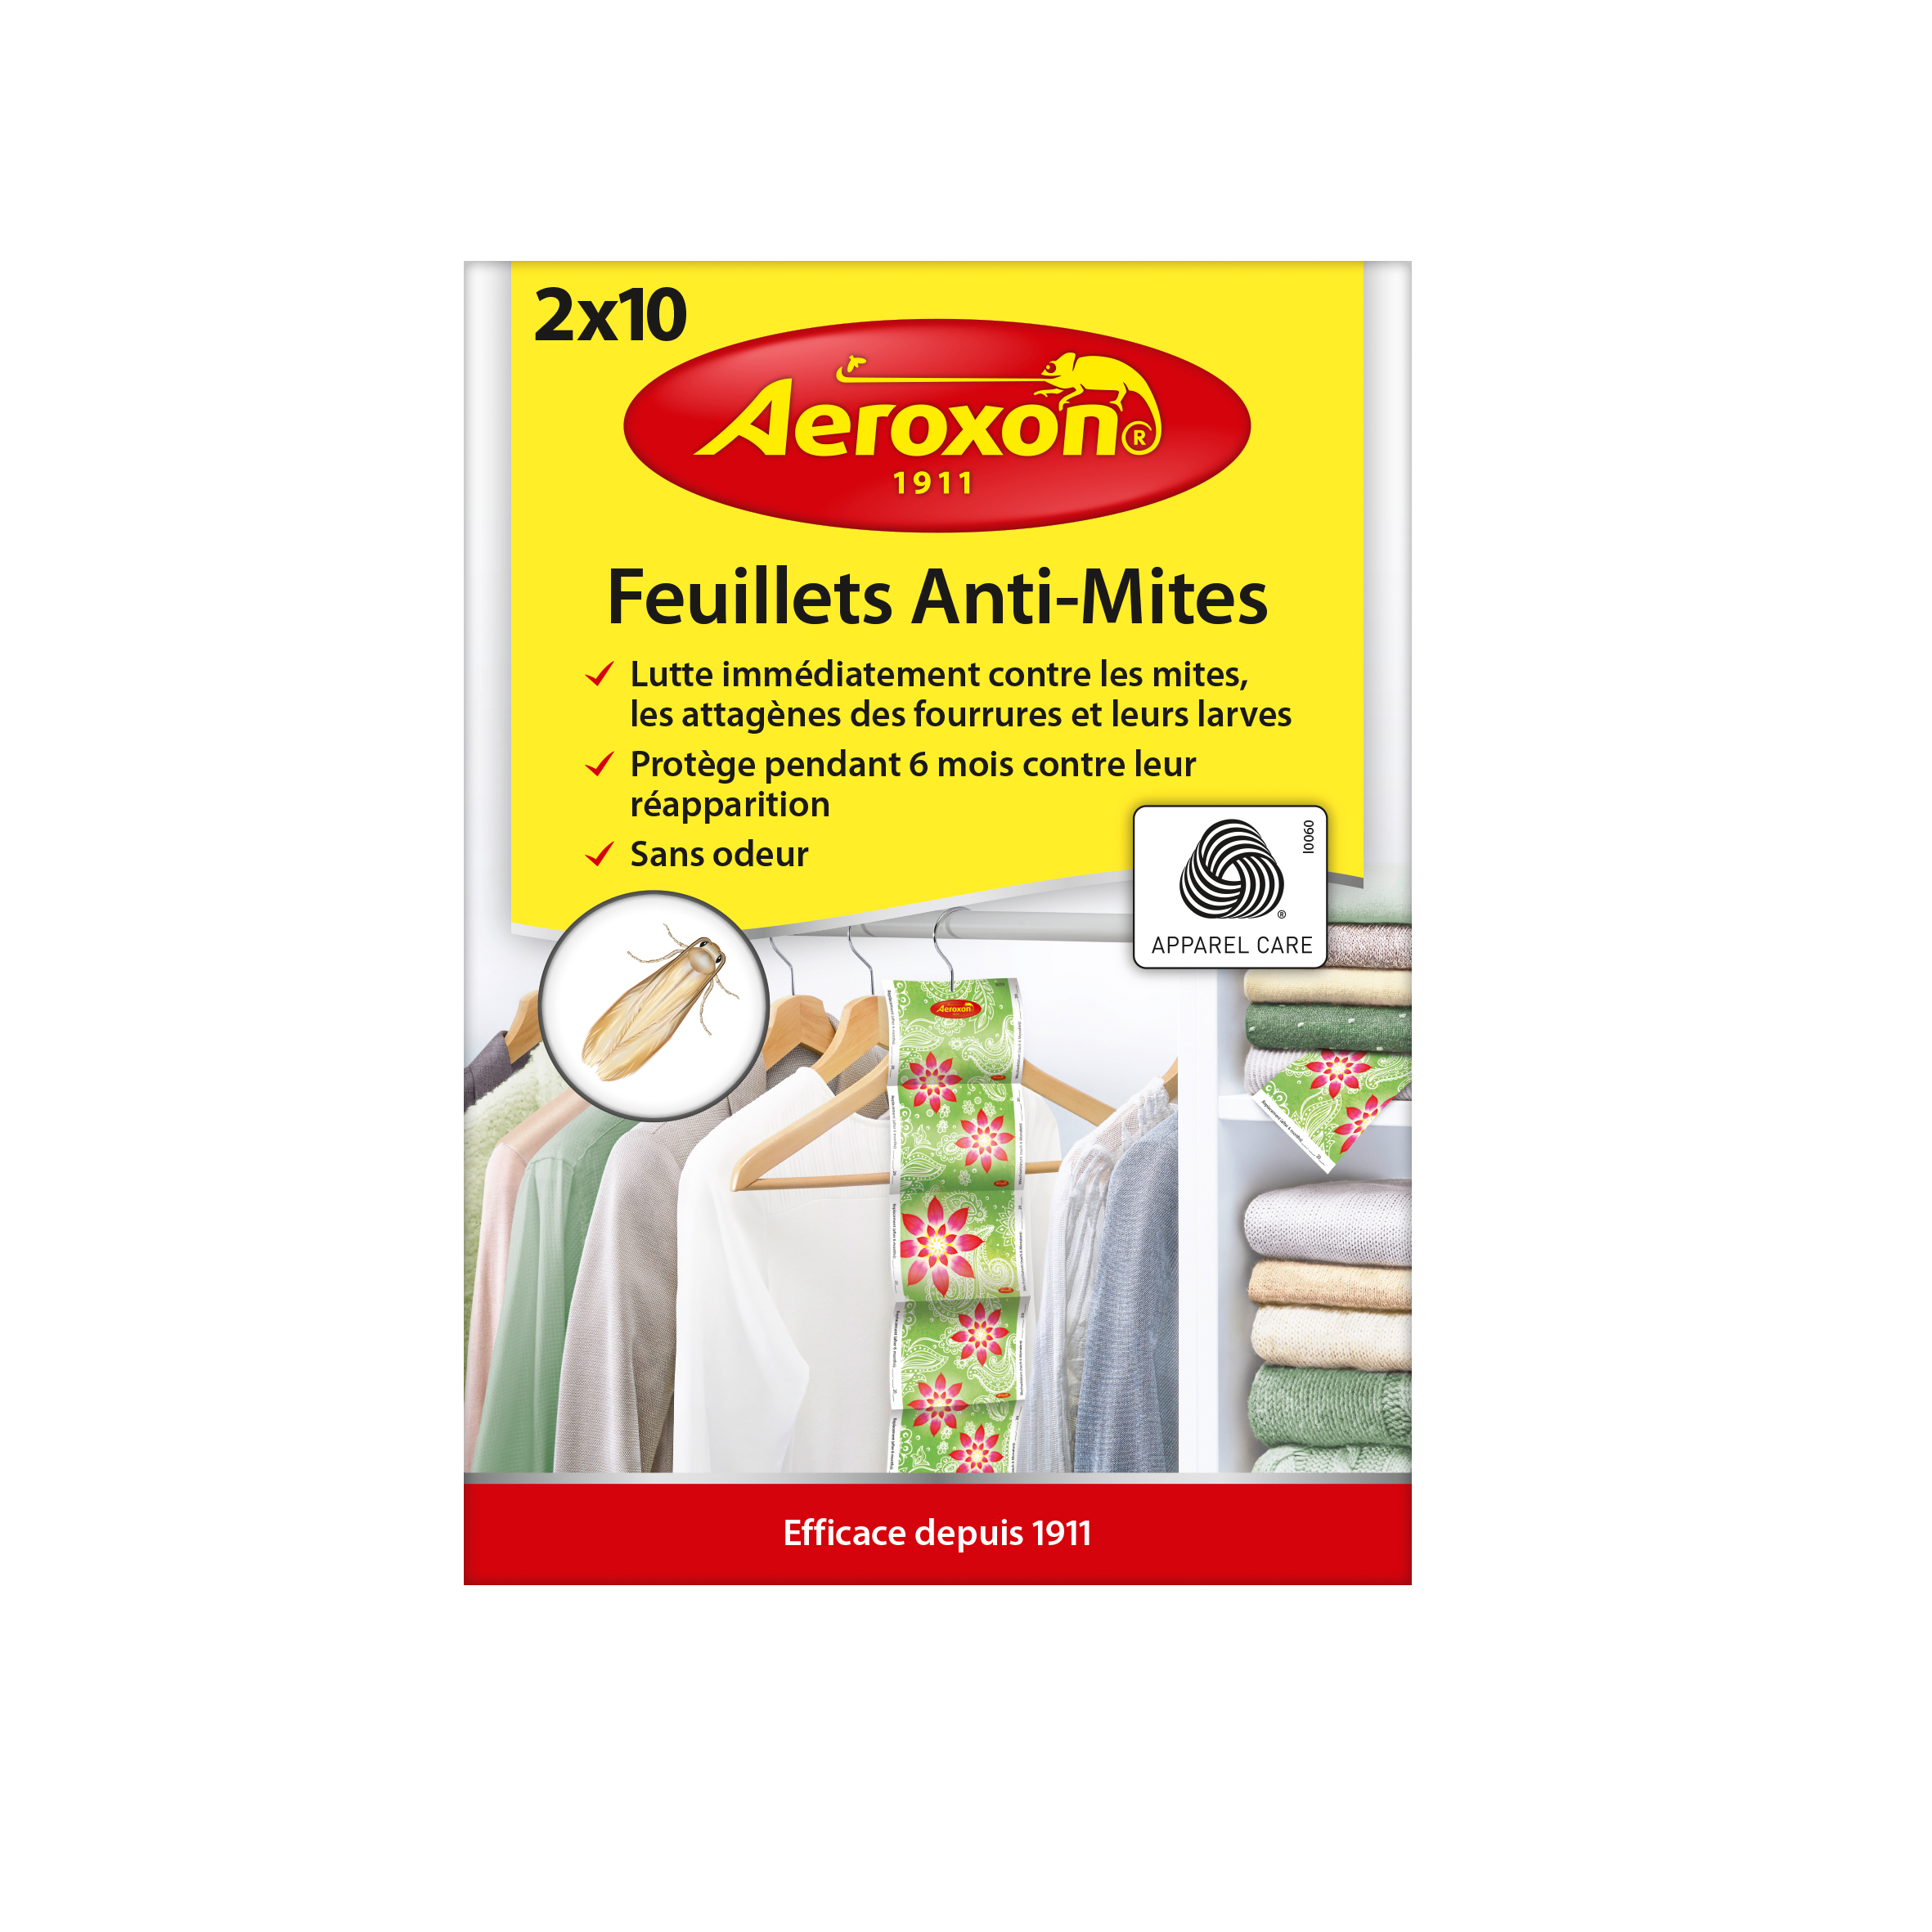 Aeroxon Feuillets Anti-Mites 2x10 pcs. image